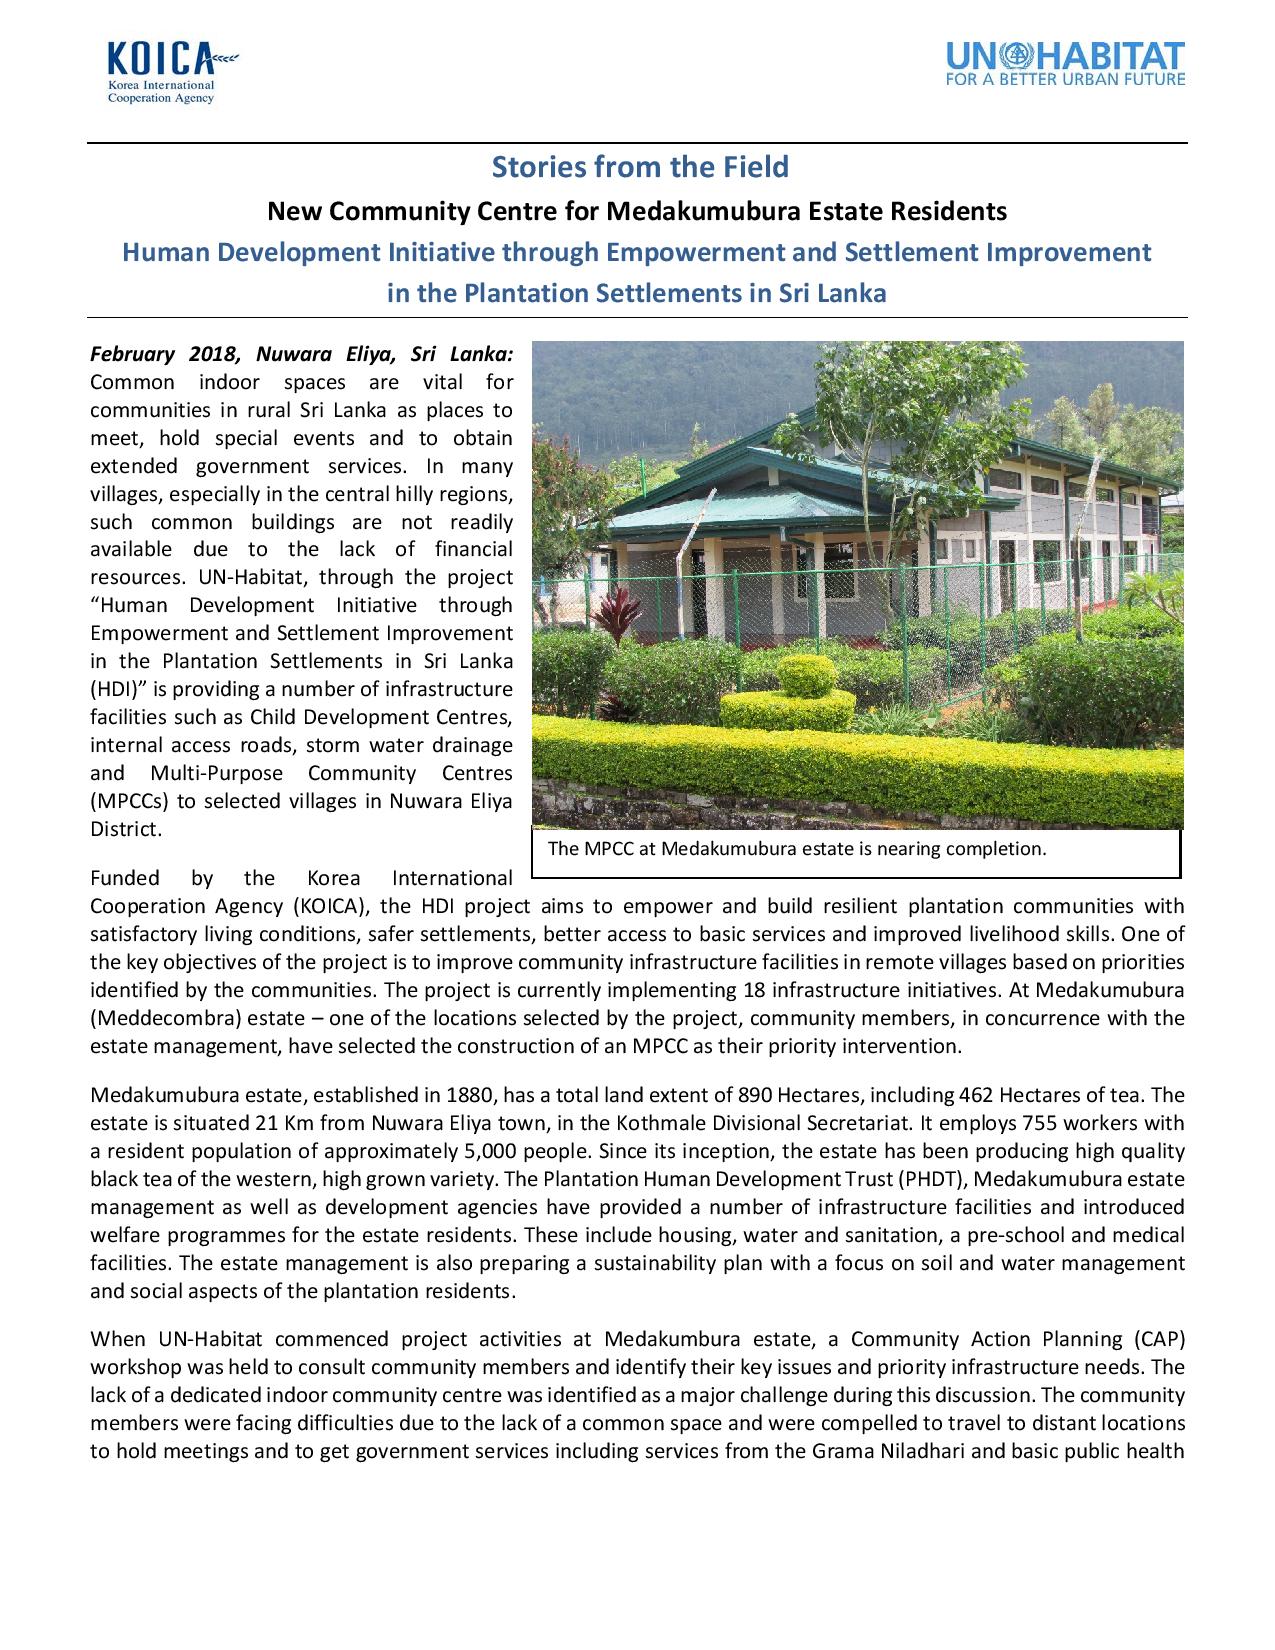 Sri Lanka HDI Case Study: New Community Centre for Medakumubura Estate Residents